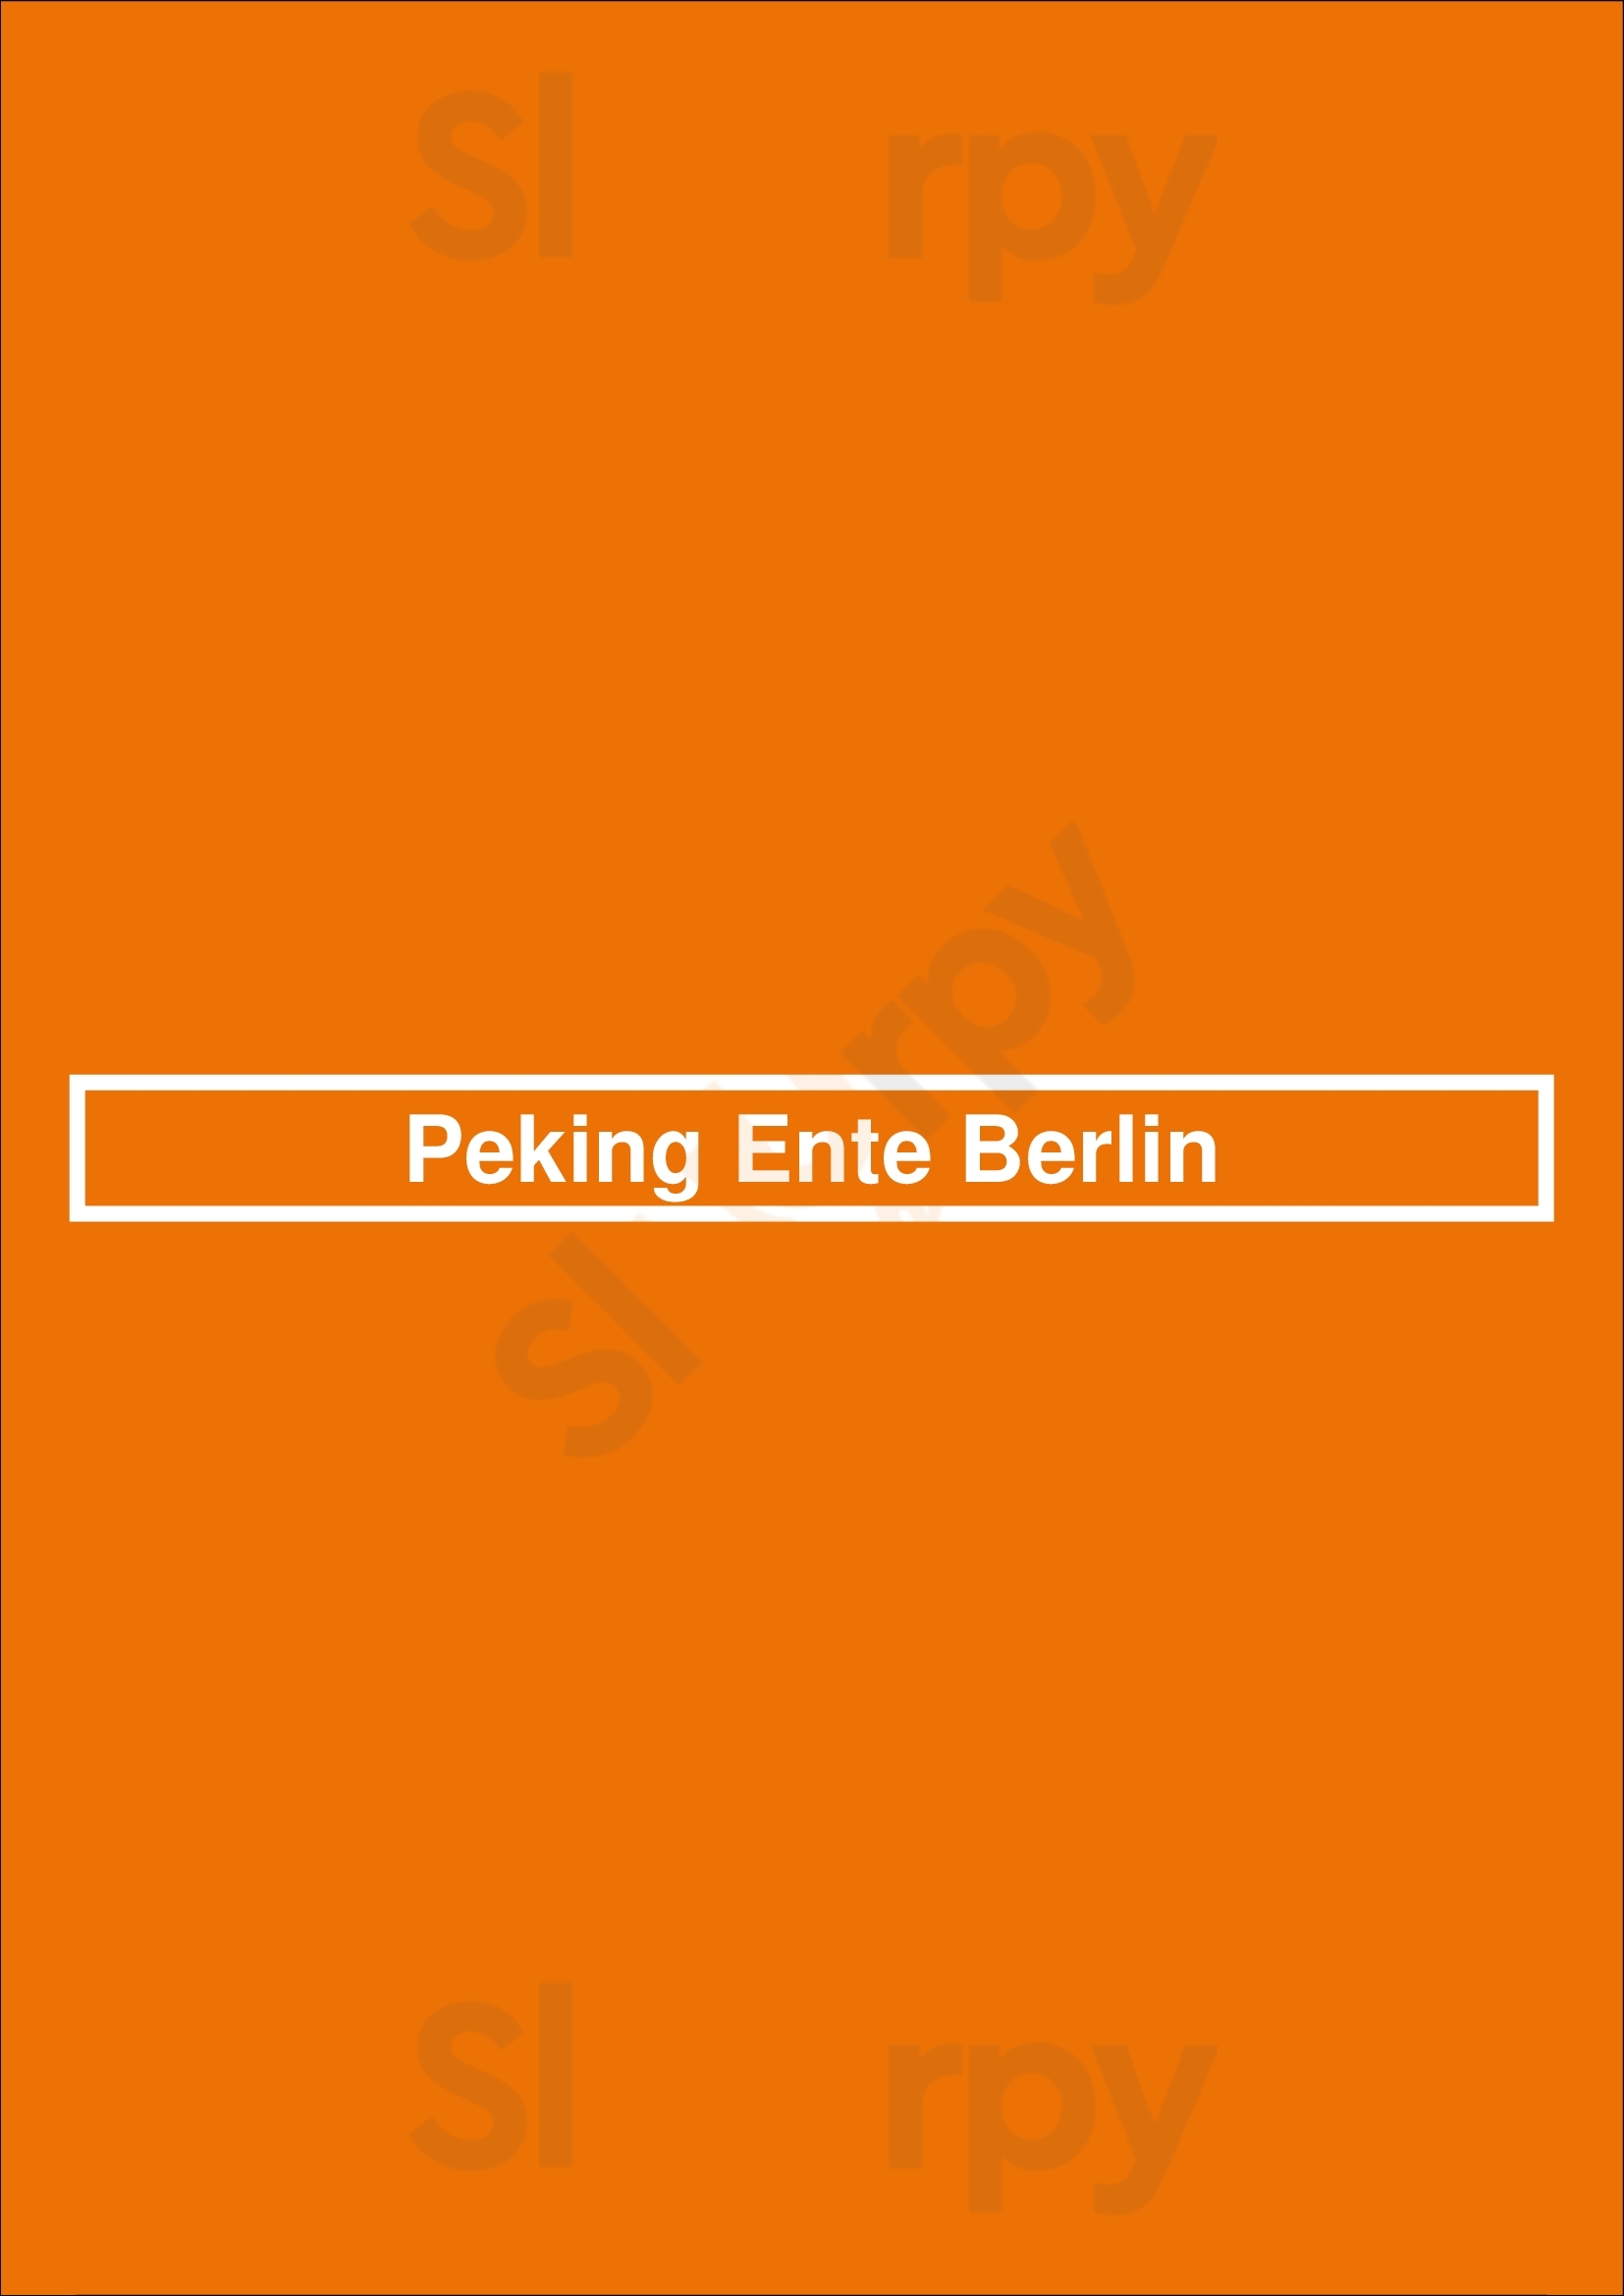 Peking Ente Berlin Berlin Menu - 1